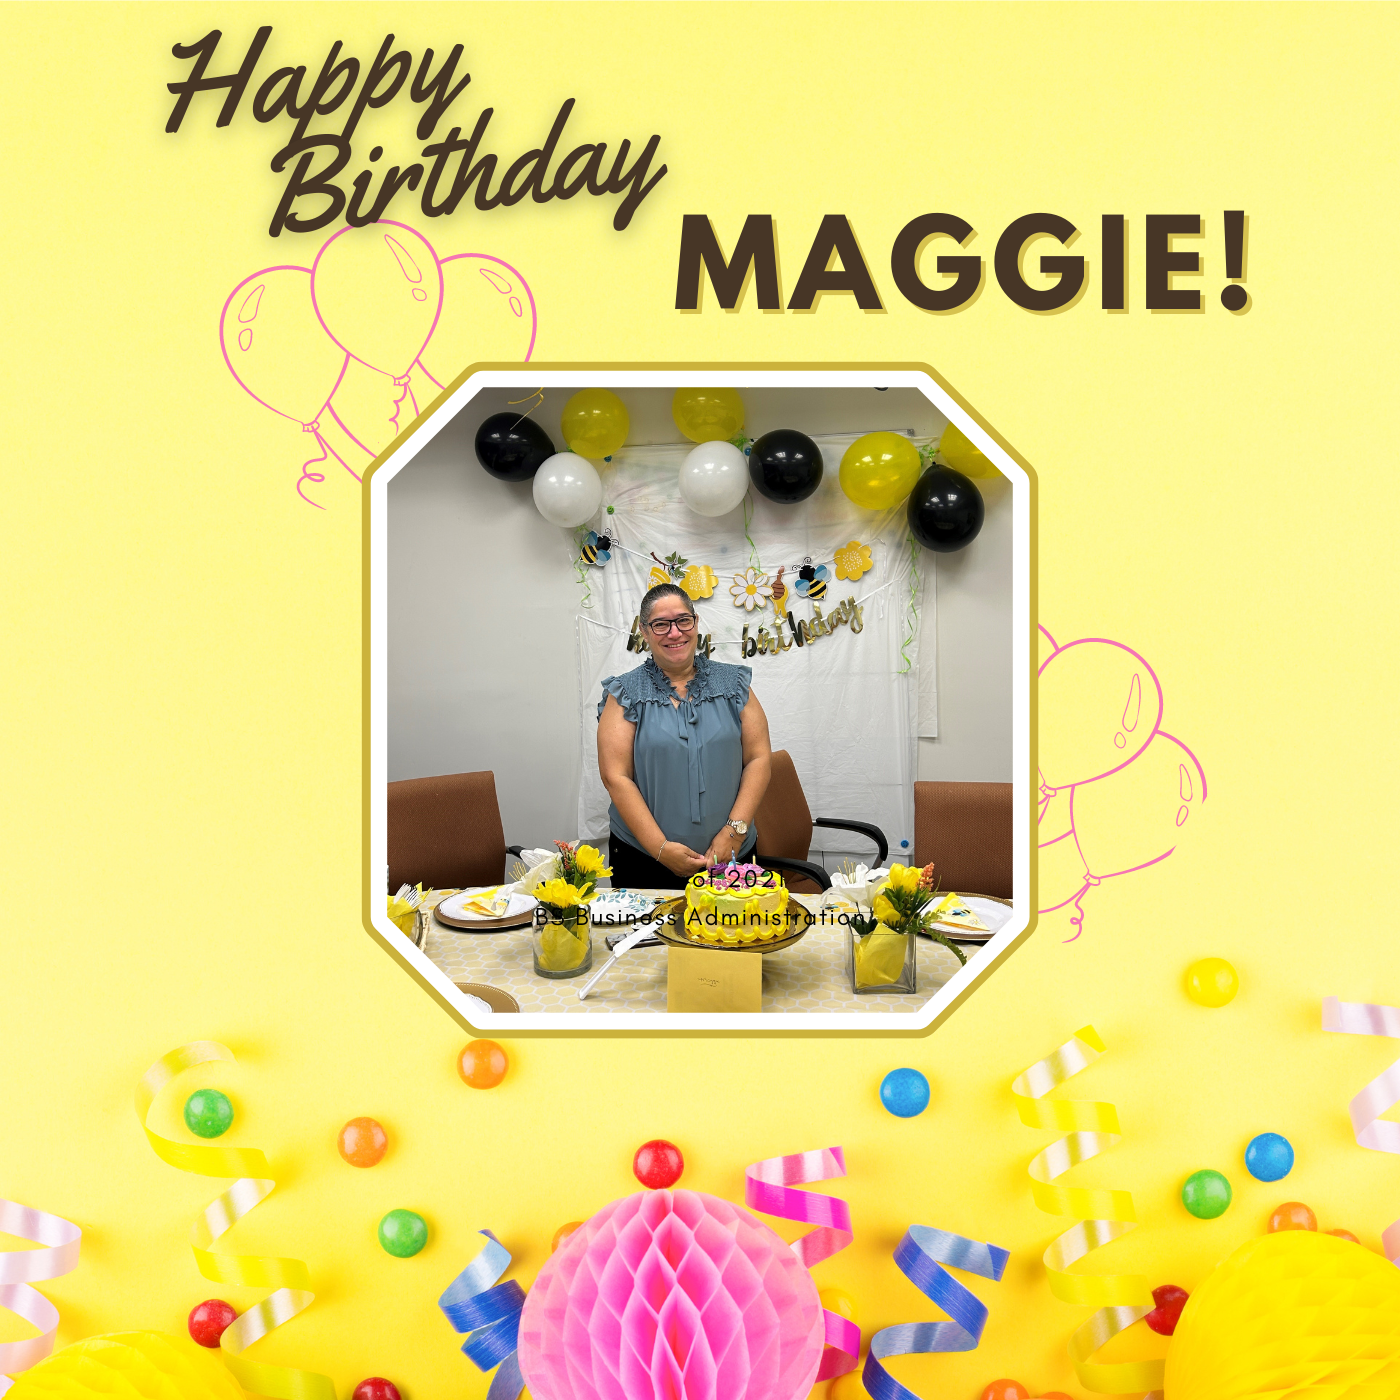 Tom Ledwidge - State Farm Insurance Agent
Maggie's birthday celebration!